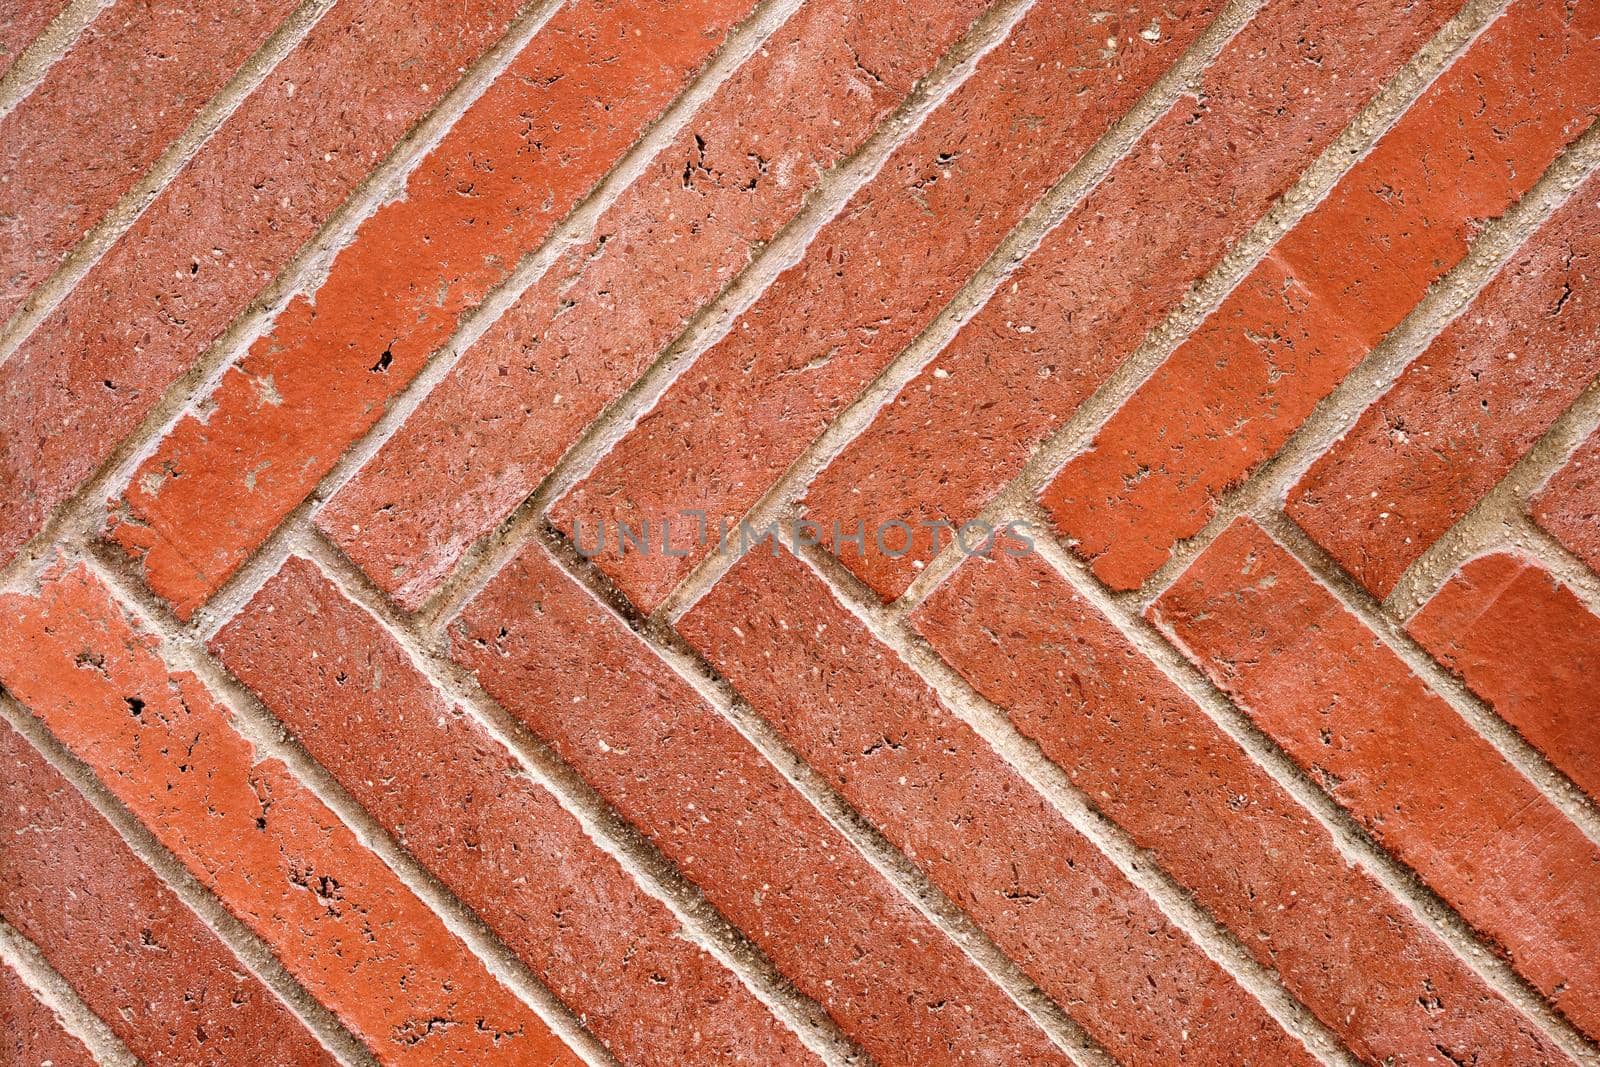 Wall made of diagonal red clinker bricks by elxeneize